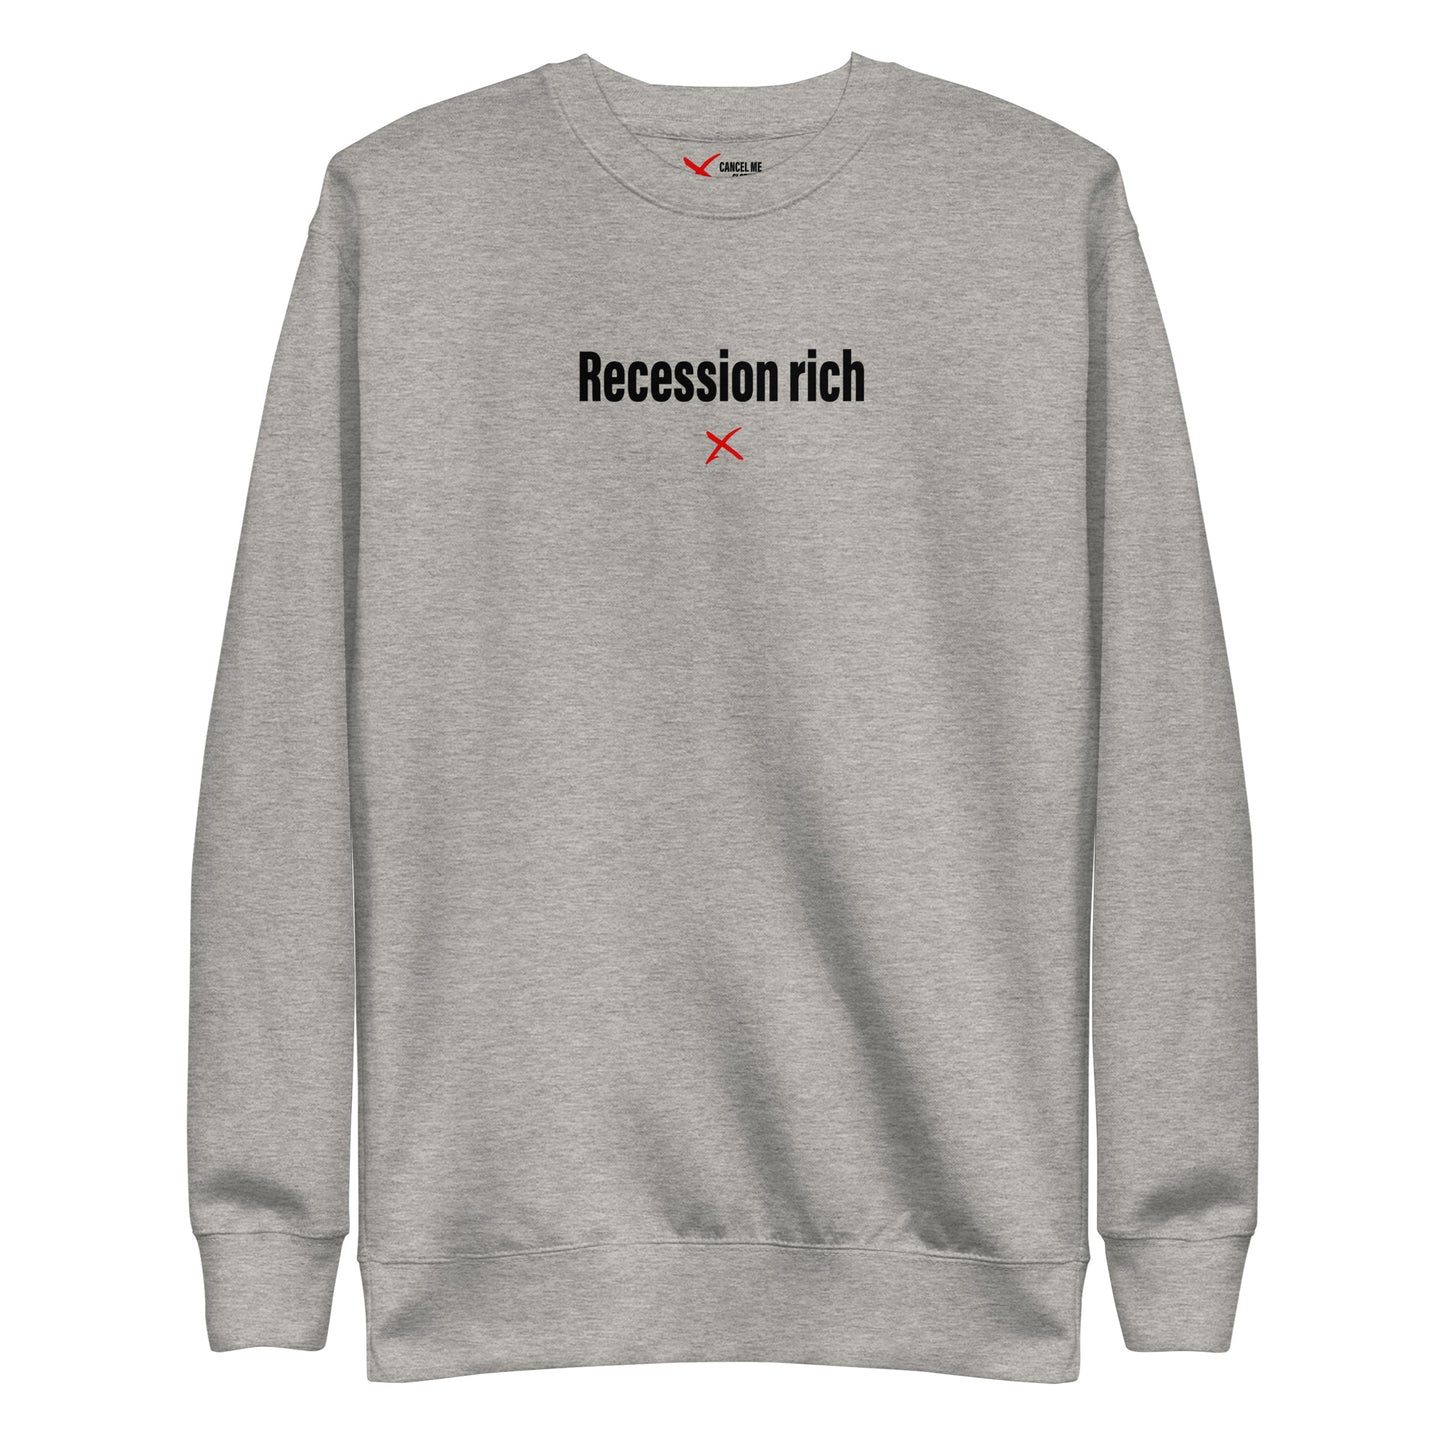 Recession rich - Sweatshirt